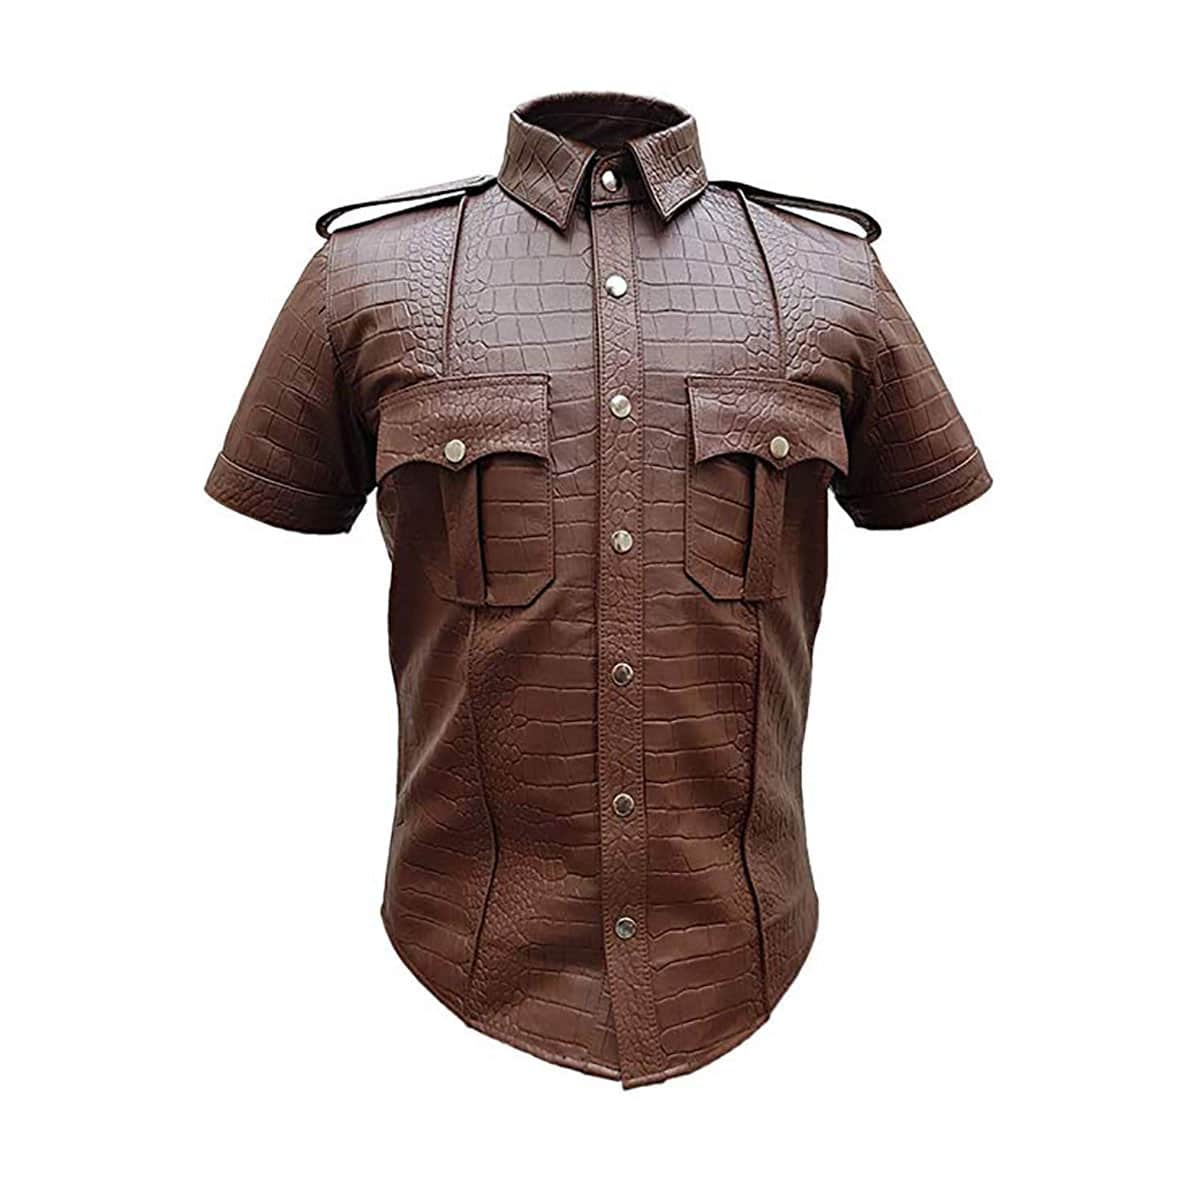 Men Brown Crocodile Print Leather Police Uniform Style Shirt - PSHS-CROC-BRW